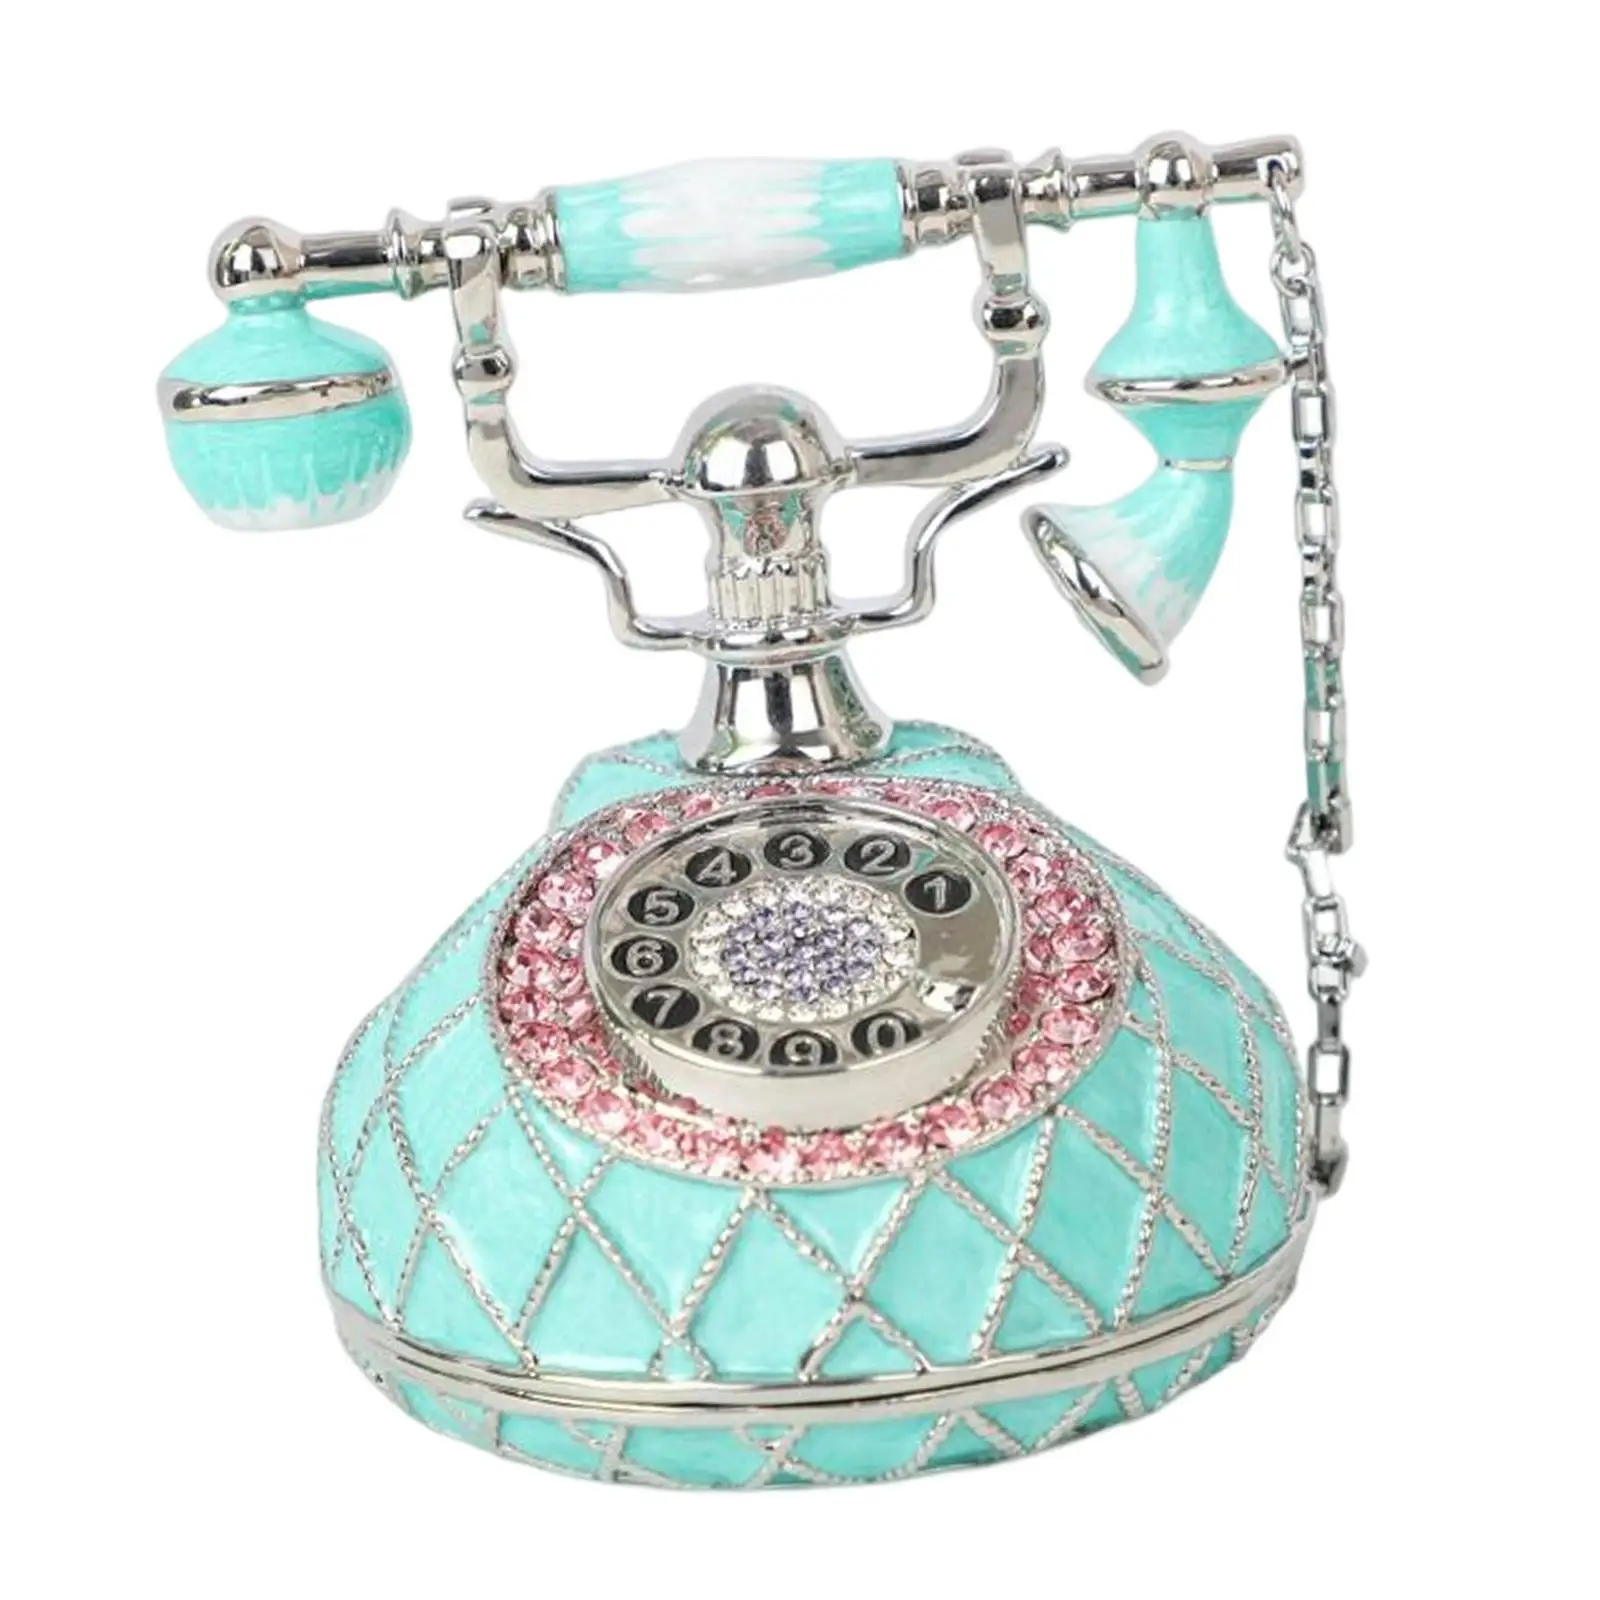 European Style Telephone Statue Jewelry Trinket Box Decoration Decorative Keepsake Gift Case for Earrings Rings Bracelet Watch